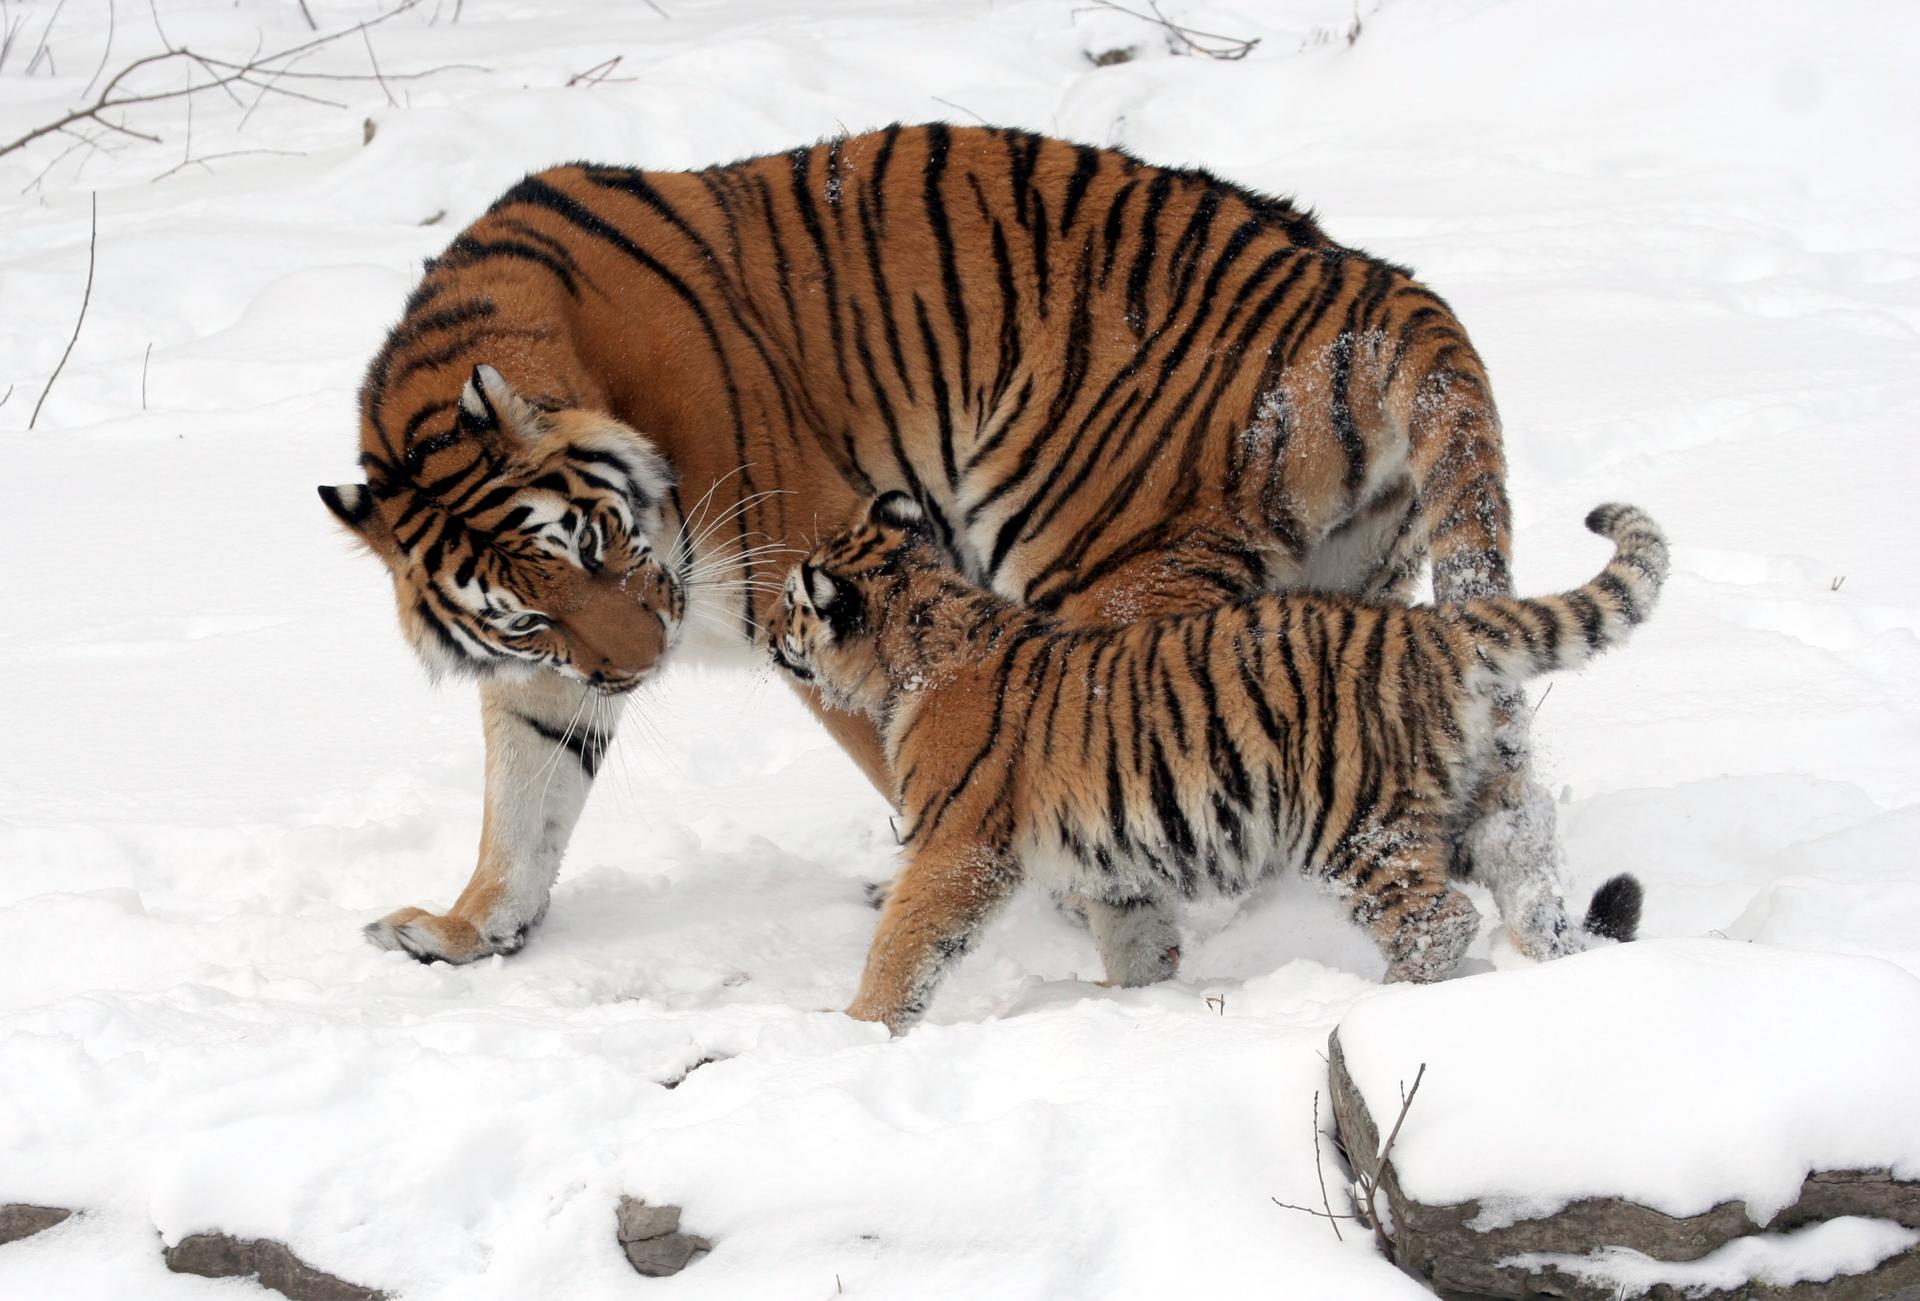 A Siberian tiger cub and its mother.